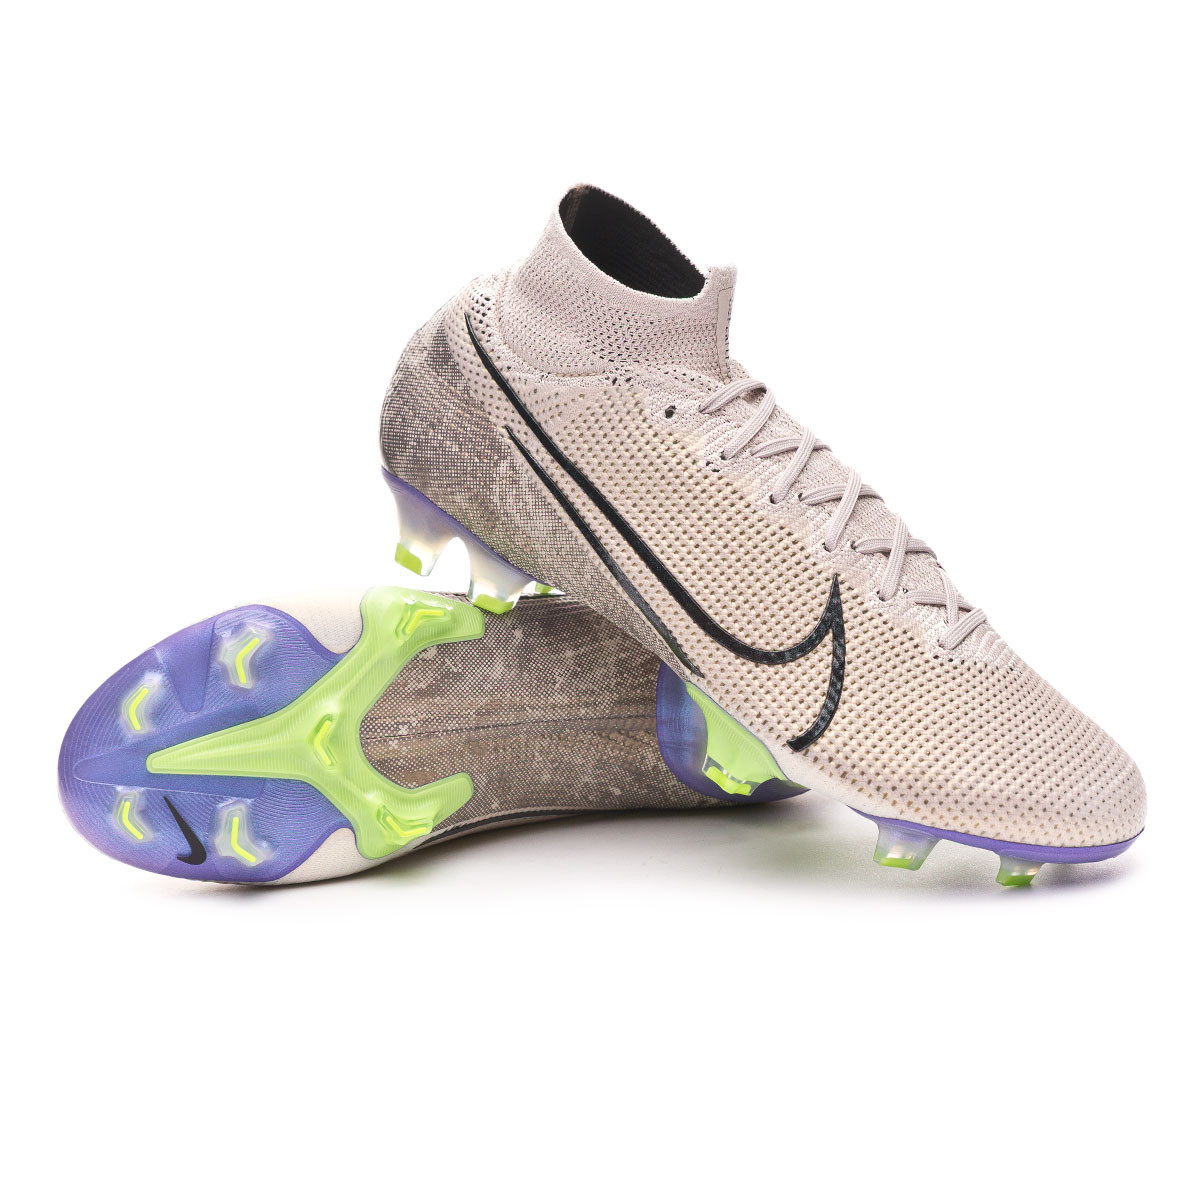 Buy Soccer Shoes For Men Nike Mercurial Superfly 6 Elite.